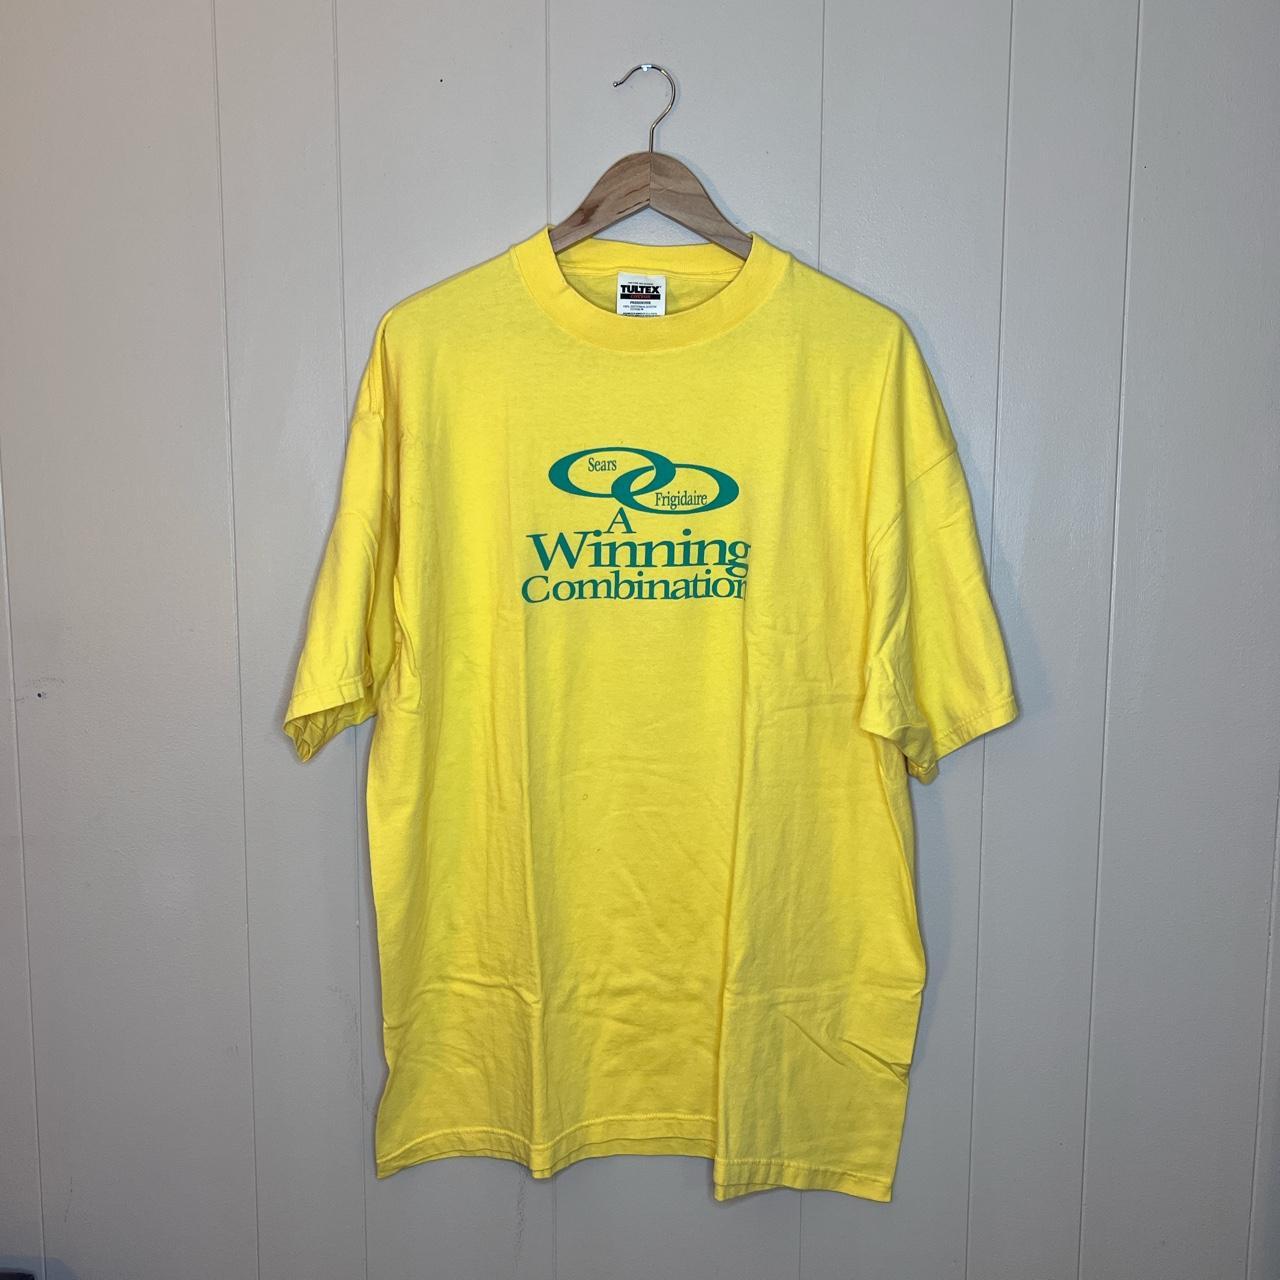 Men's Yellow T Shirts + FREE SHIPPING, Clothing